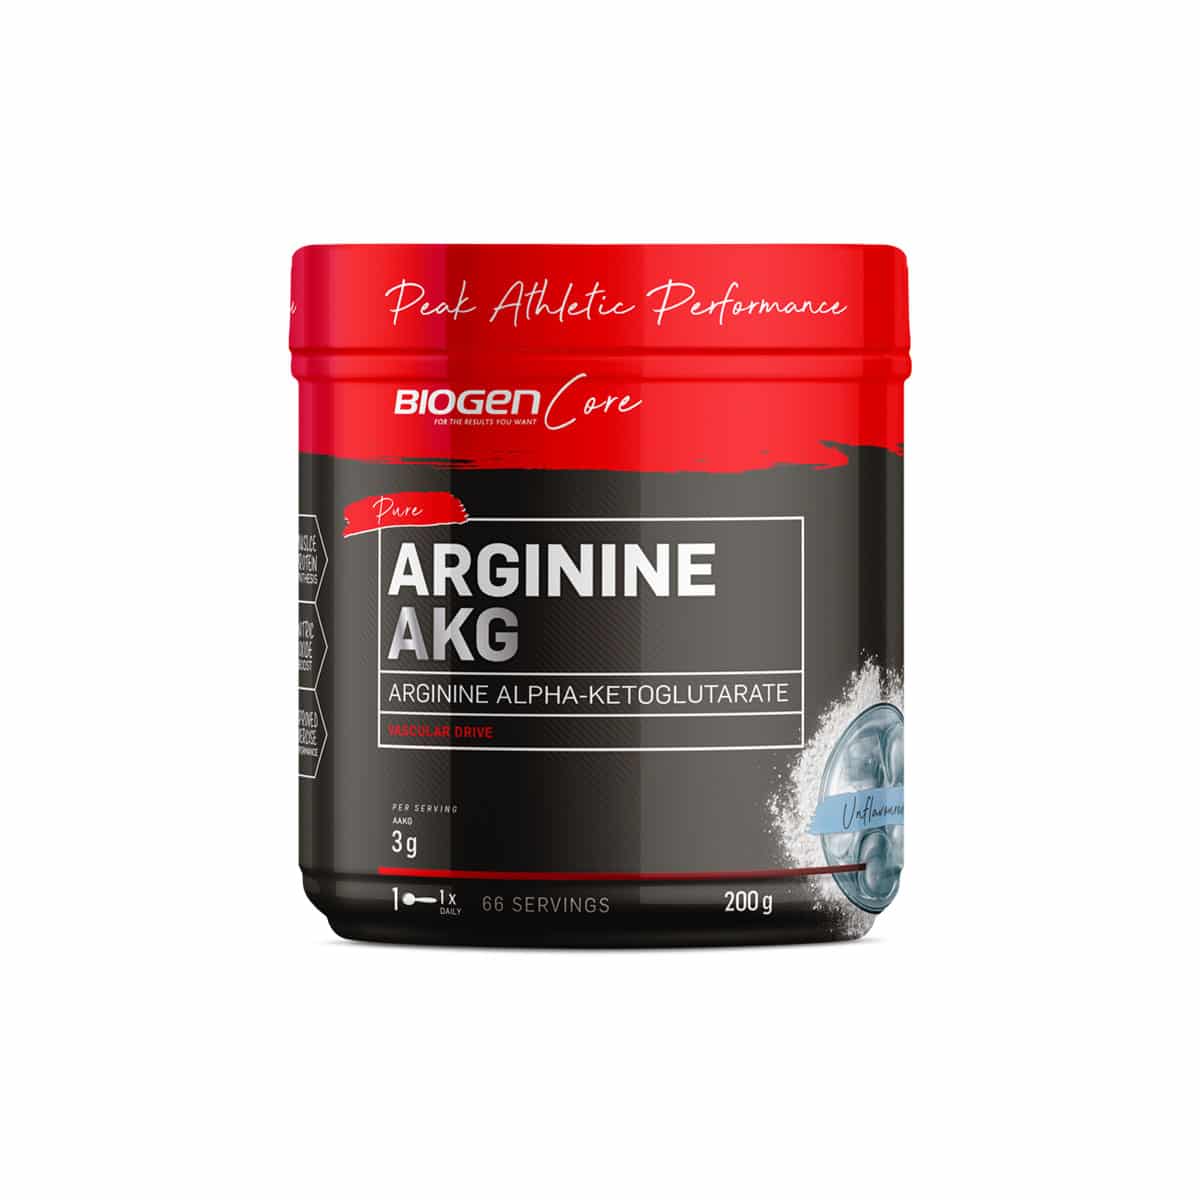 Biogen Pure Arginine AKG - 200g